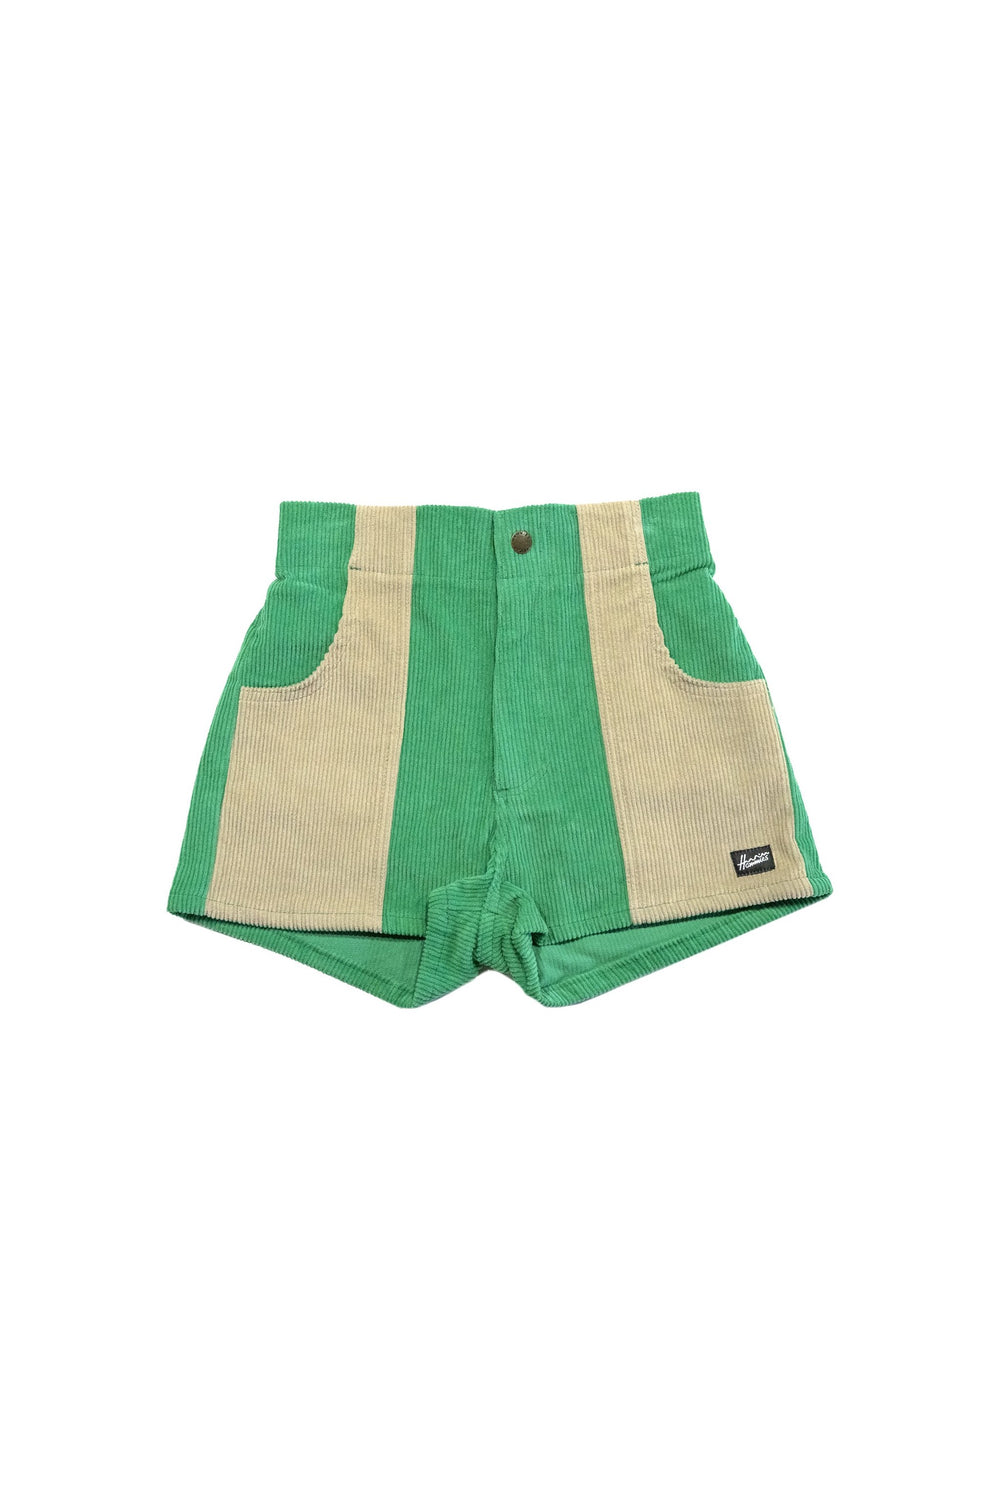 Green + Sand Hammies Shorts